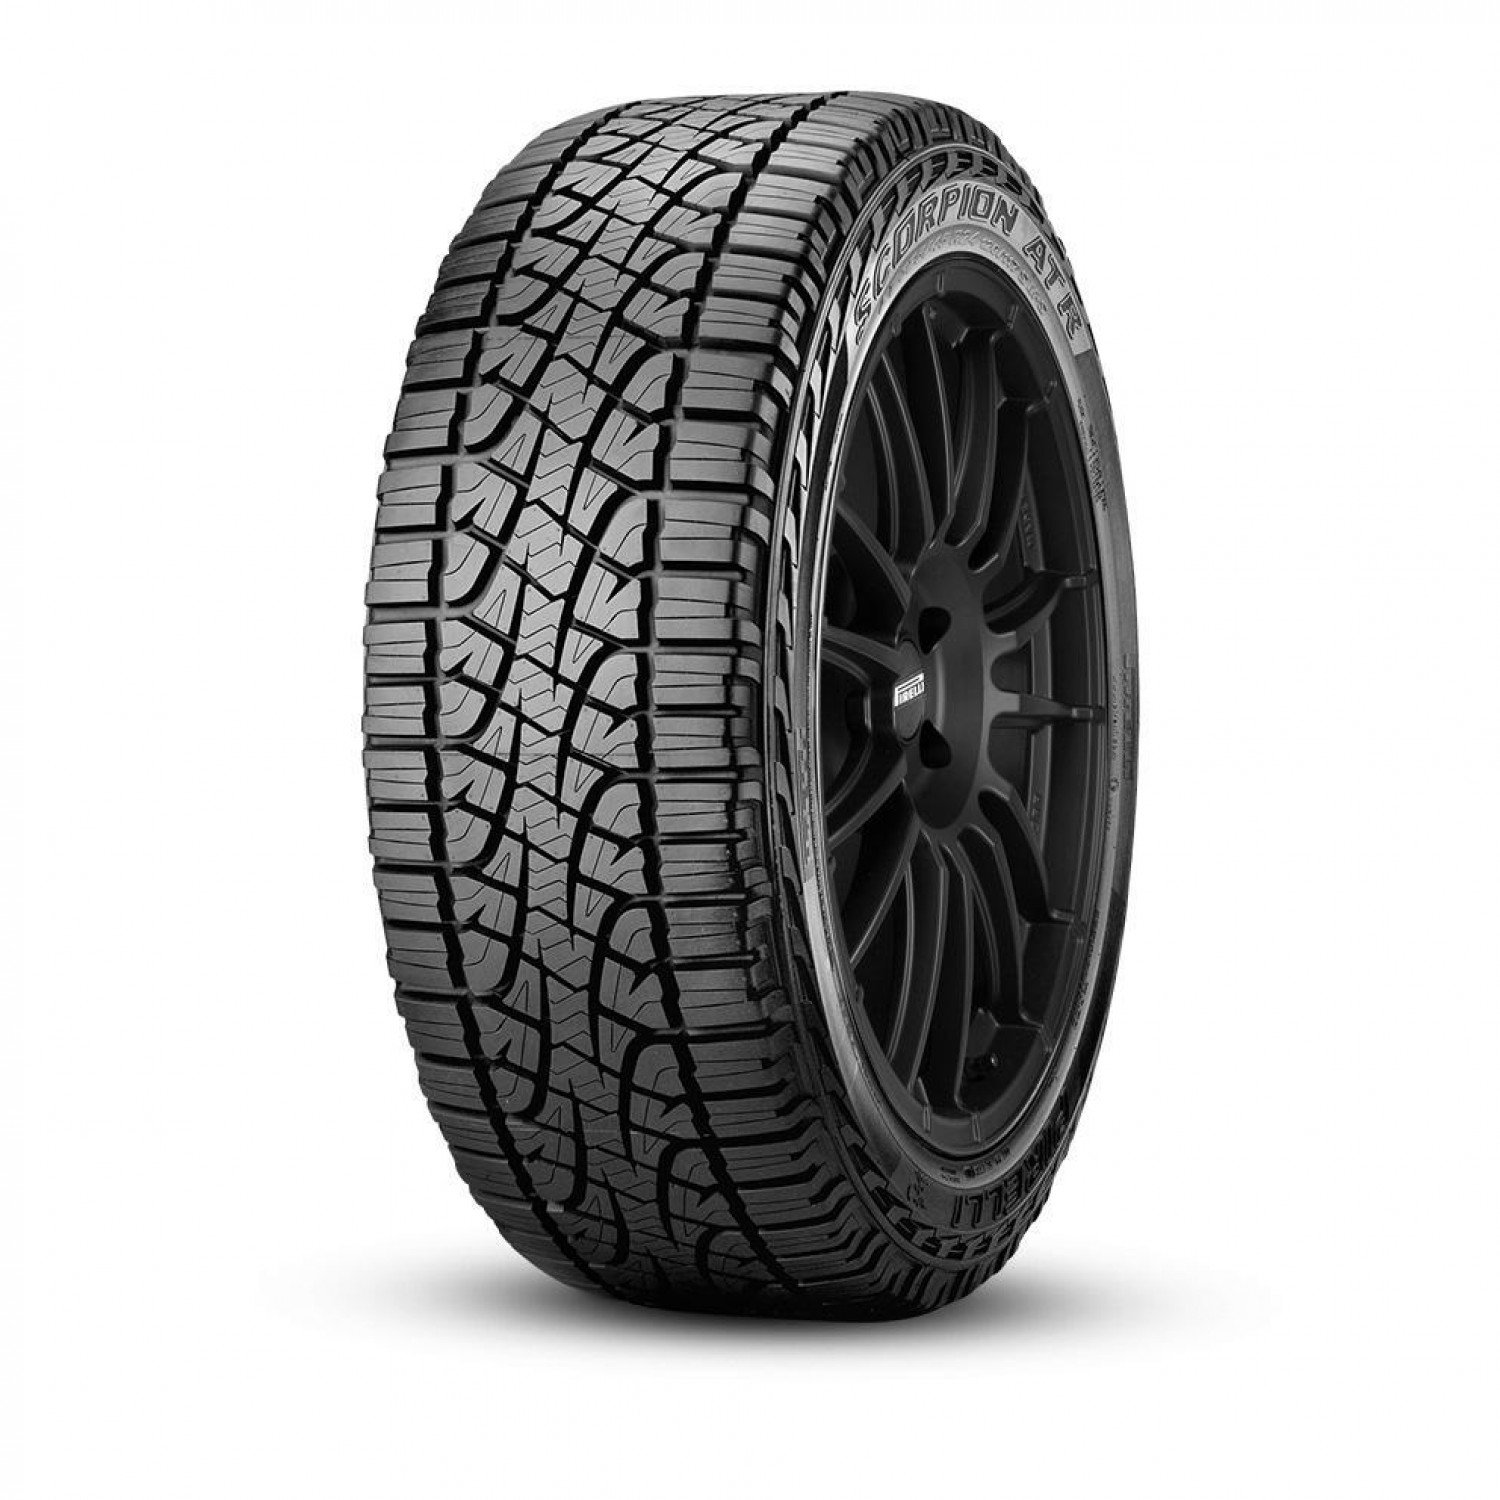 Pirelli Scorpion All Outlined Sidewall vzn121972 (245/70R17 White Terrain Reversable Tire 110T) Letters/Black Plus